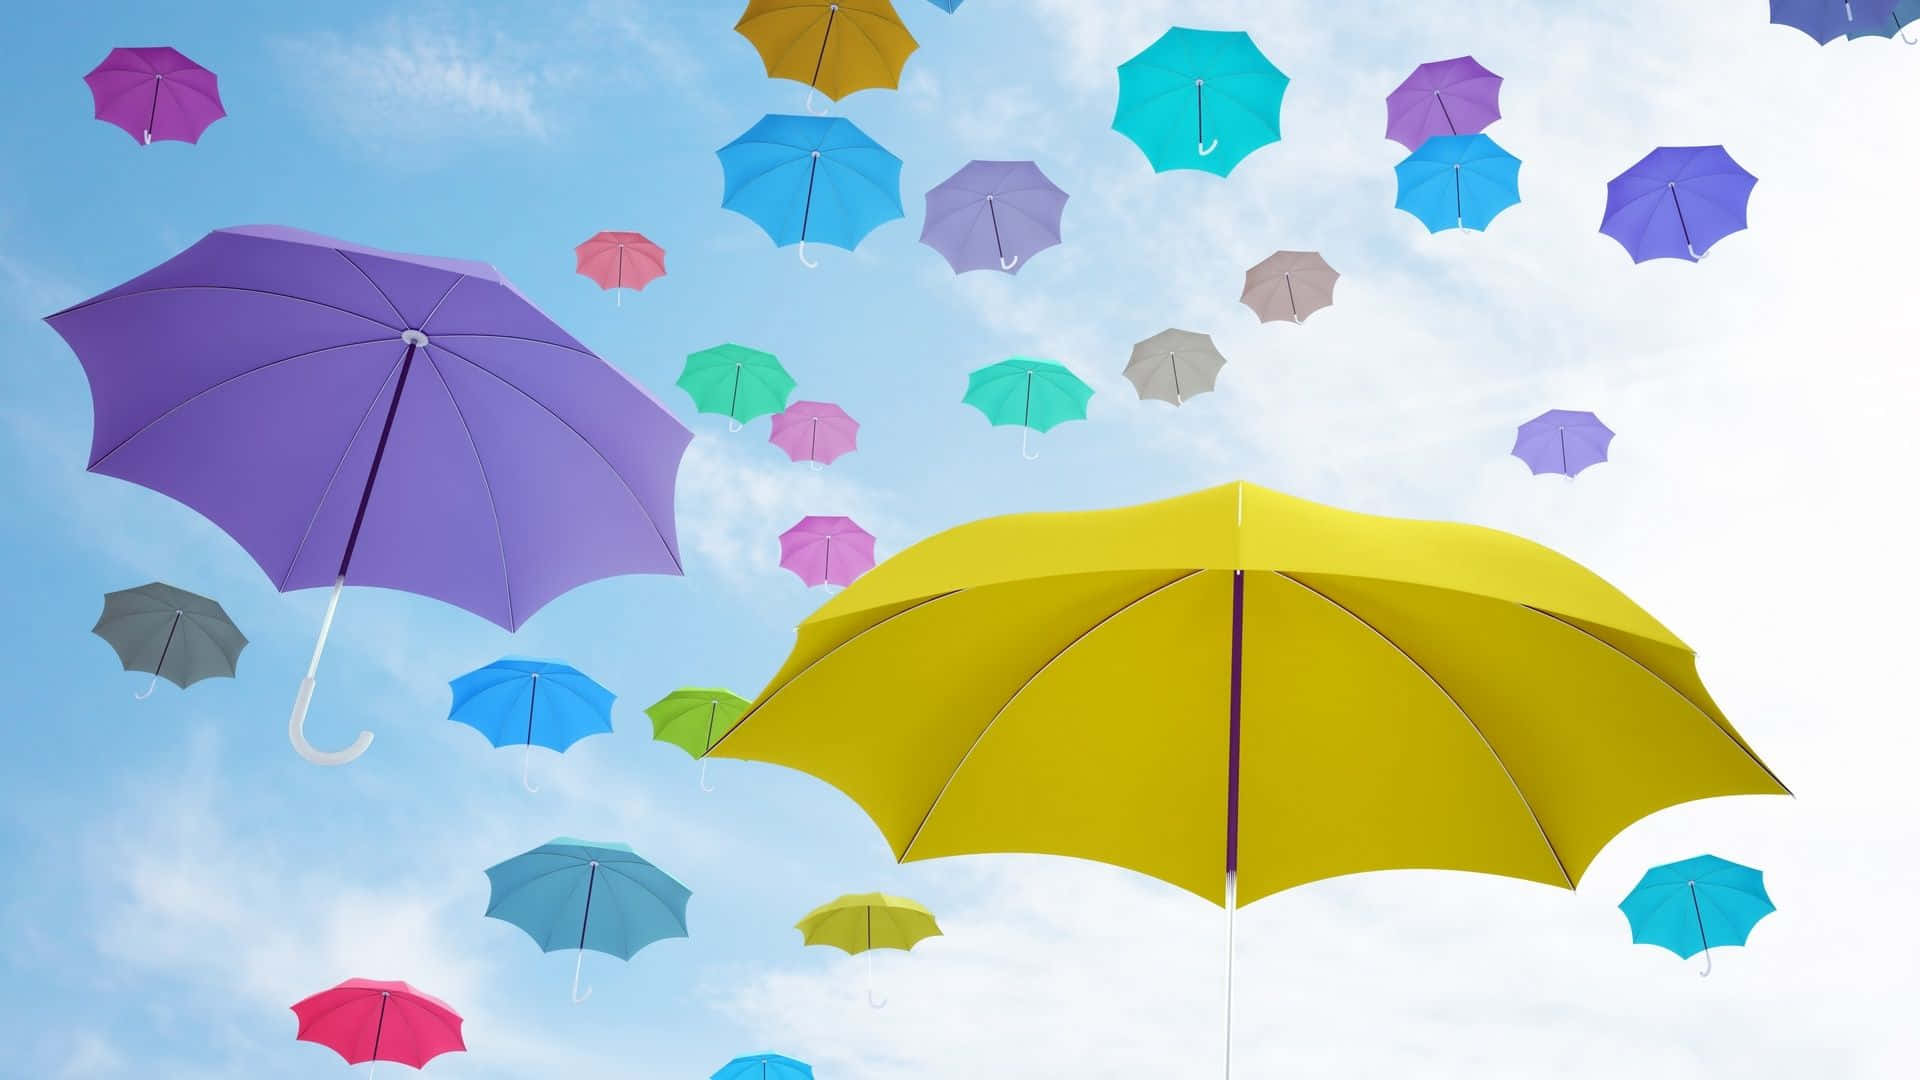 Vibrant Beach Umbrella on a Sunny Day Wallpaper